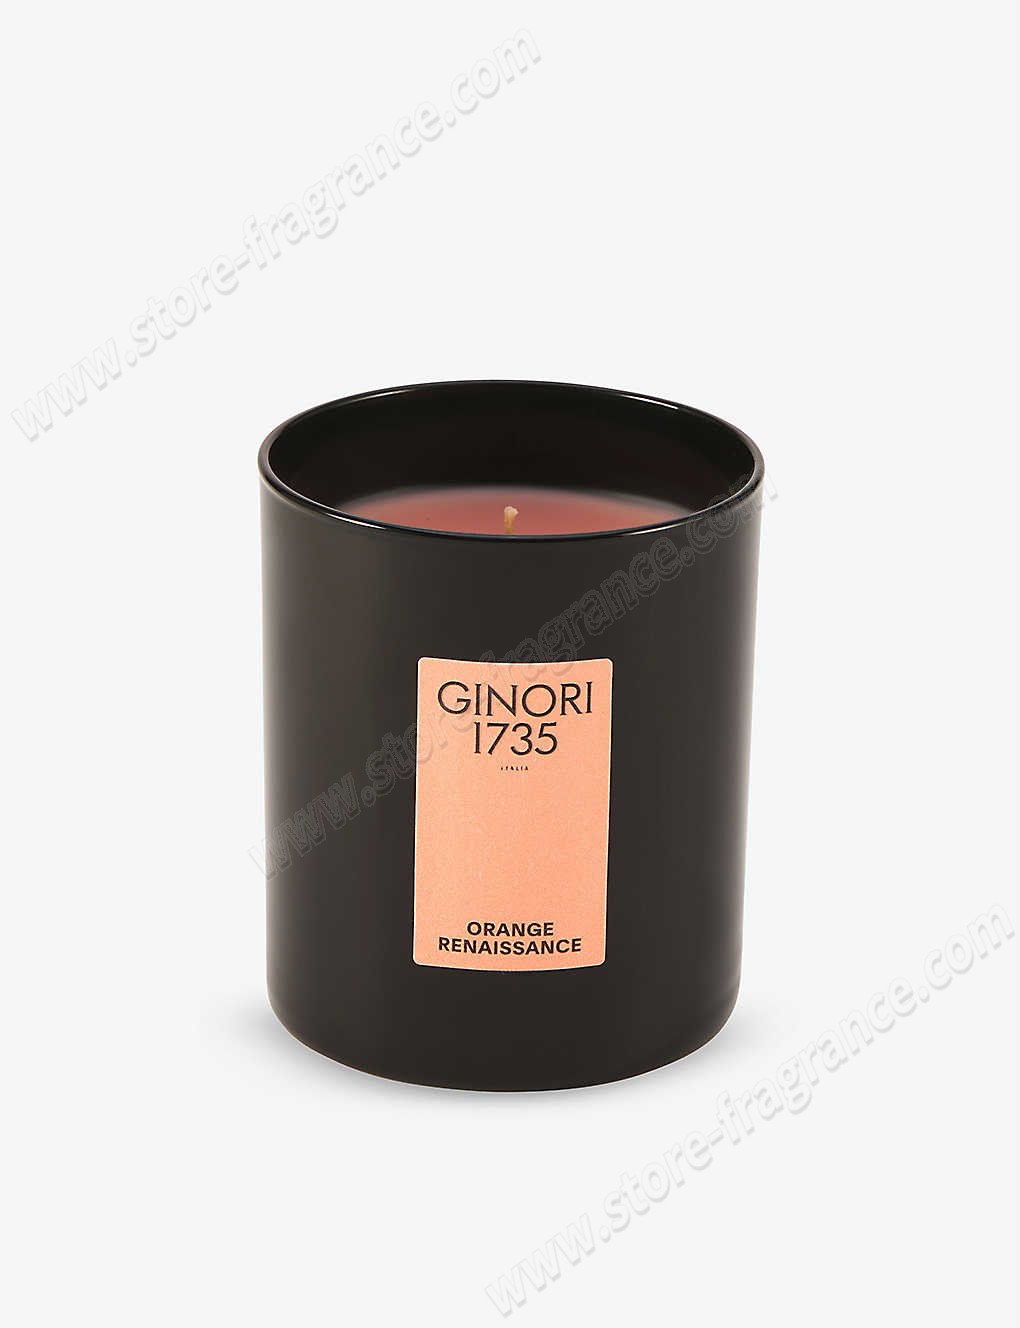 GINORI 1735/Orange Renaissance refillable scented candle 190g ✿ Discount Store - -0